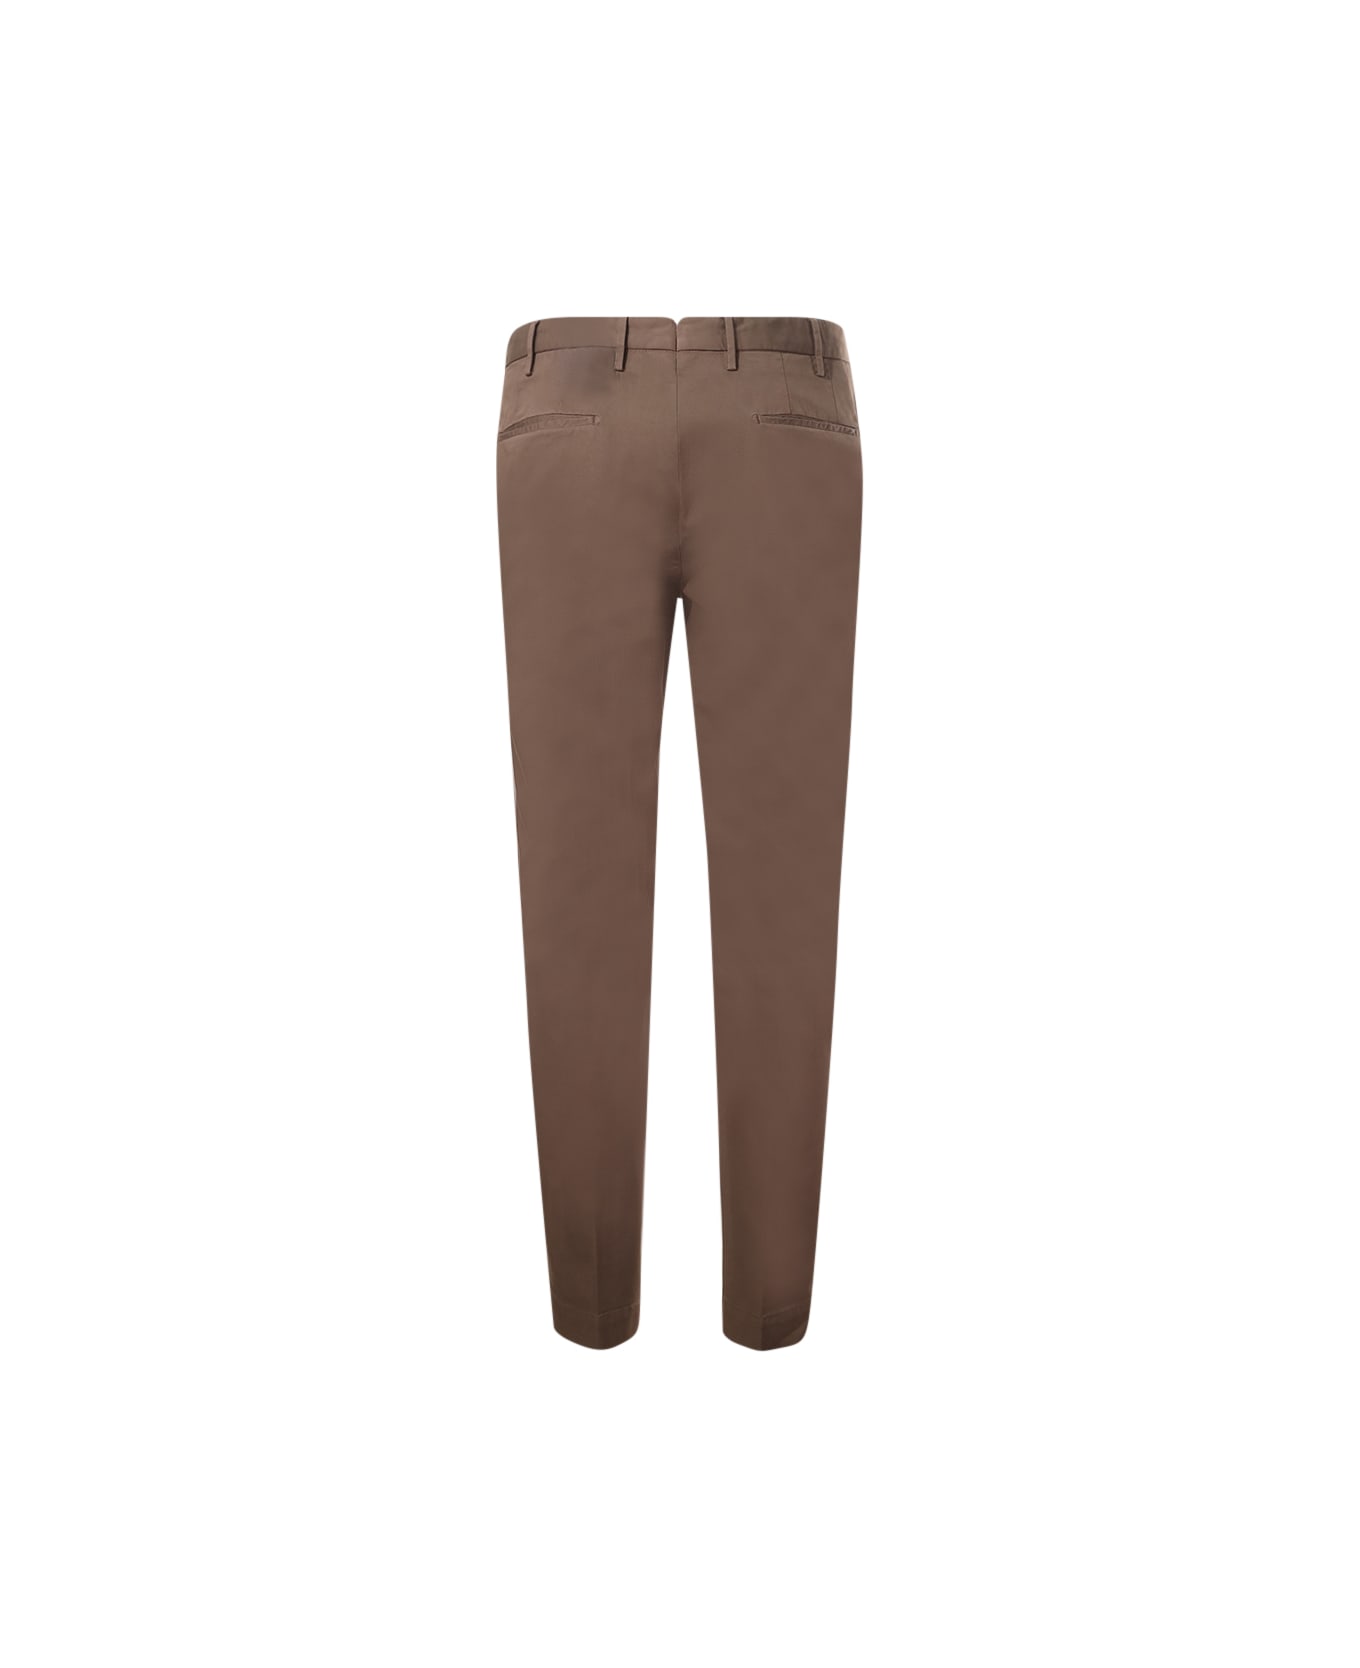 Incotex Trousers - Dark Brown